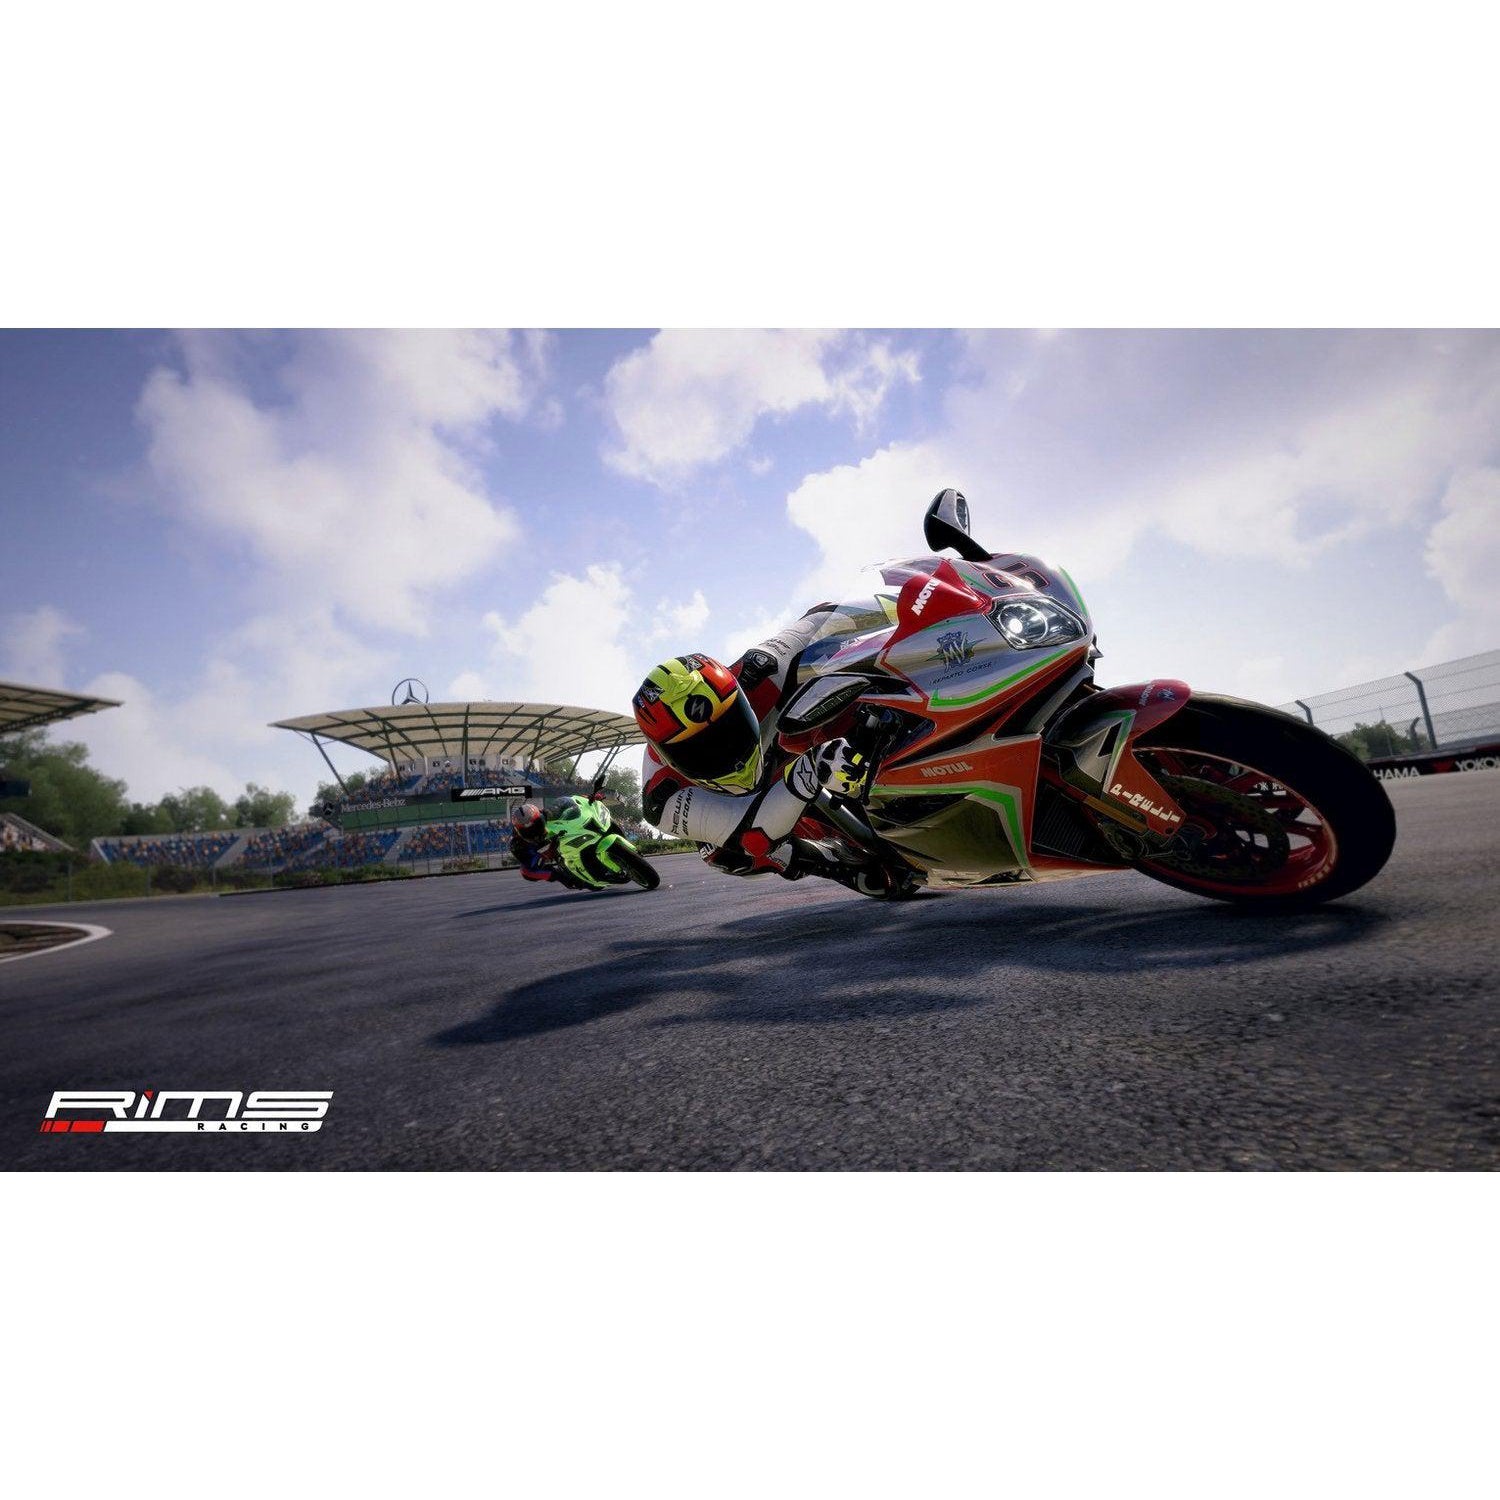 RiMS Racing (PS4)